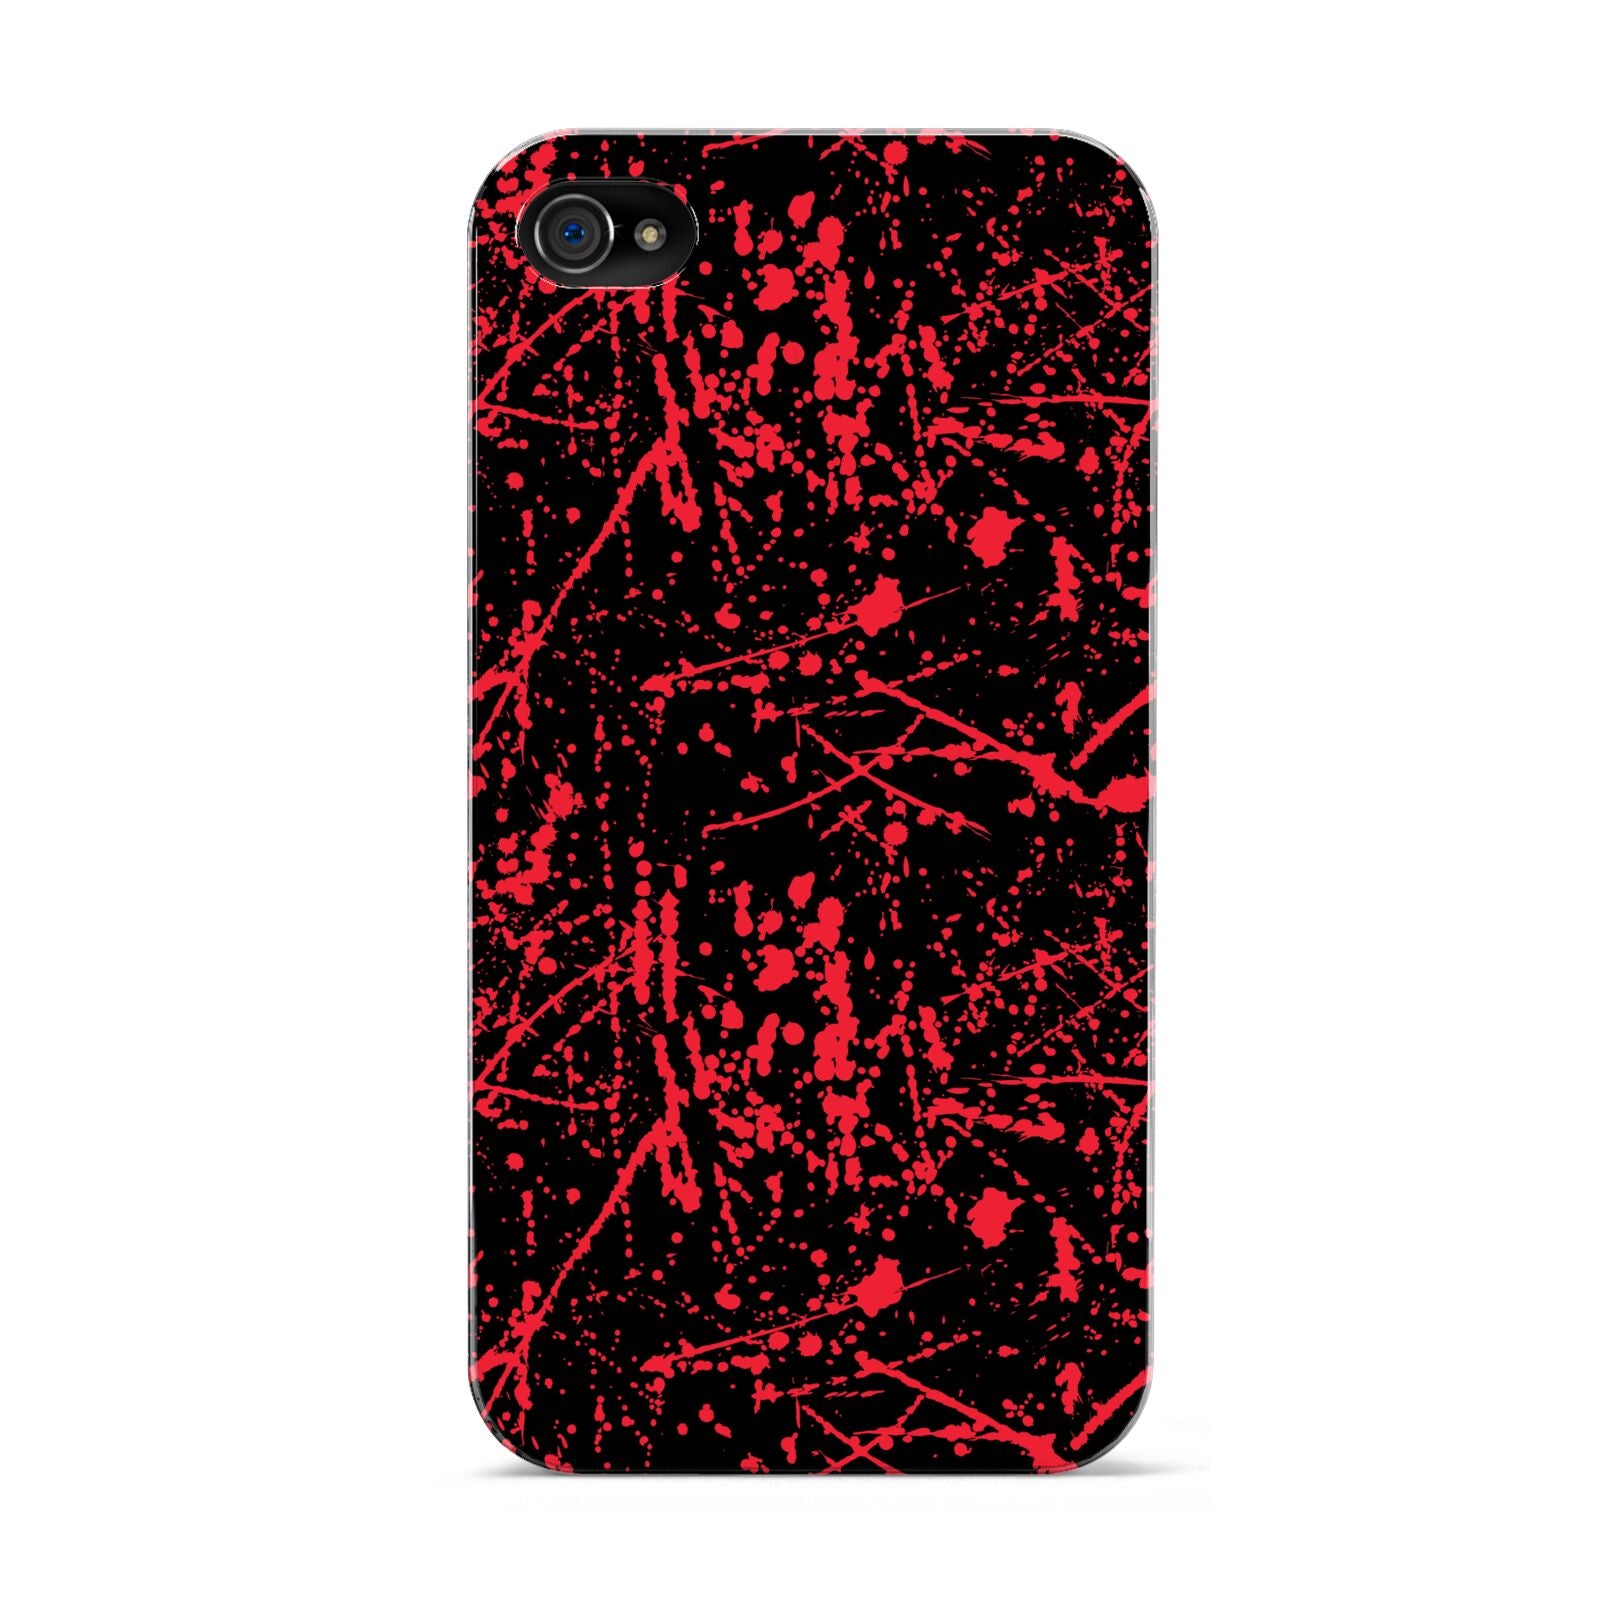 Blood Splatters Apple iPhone 4s Case